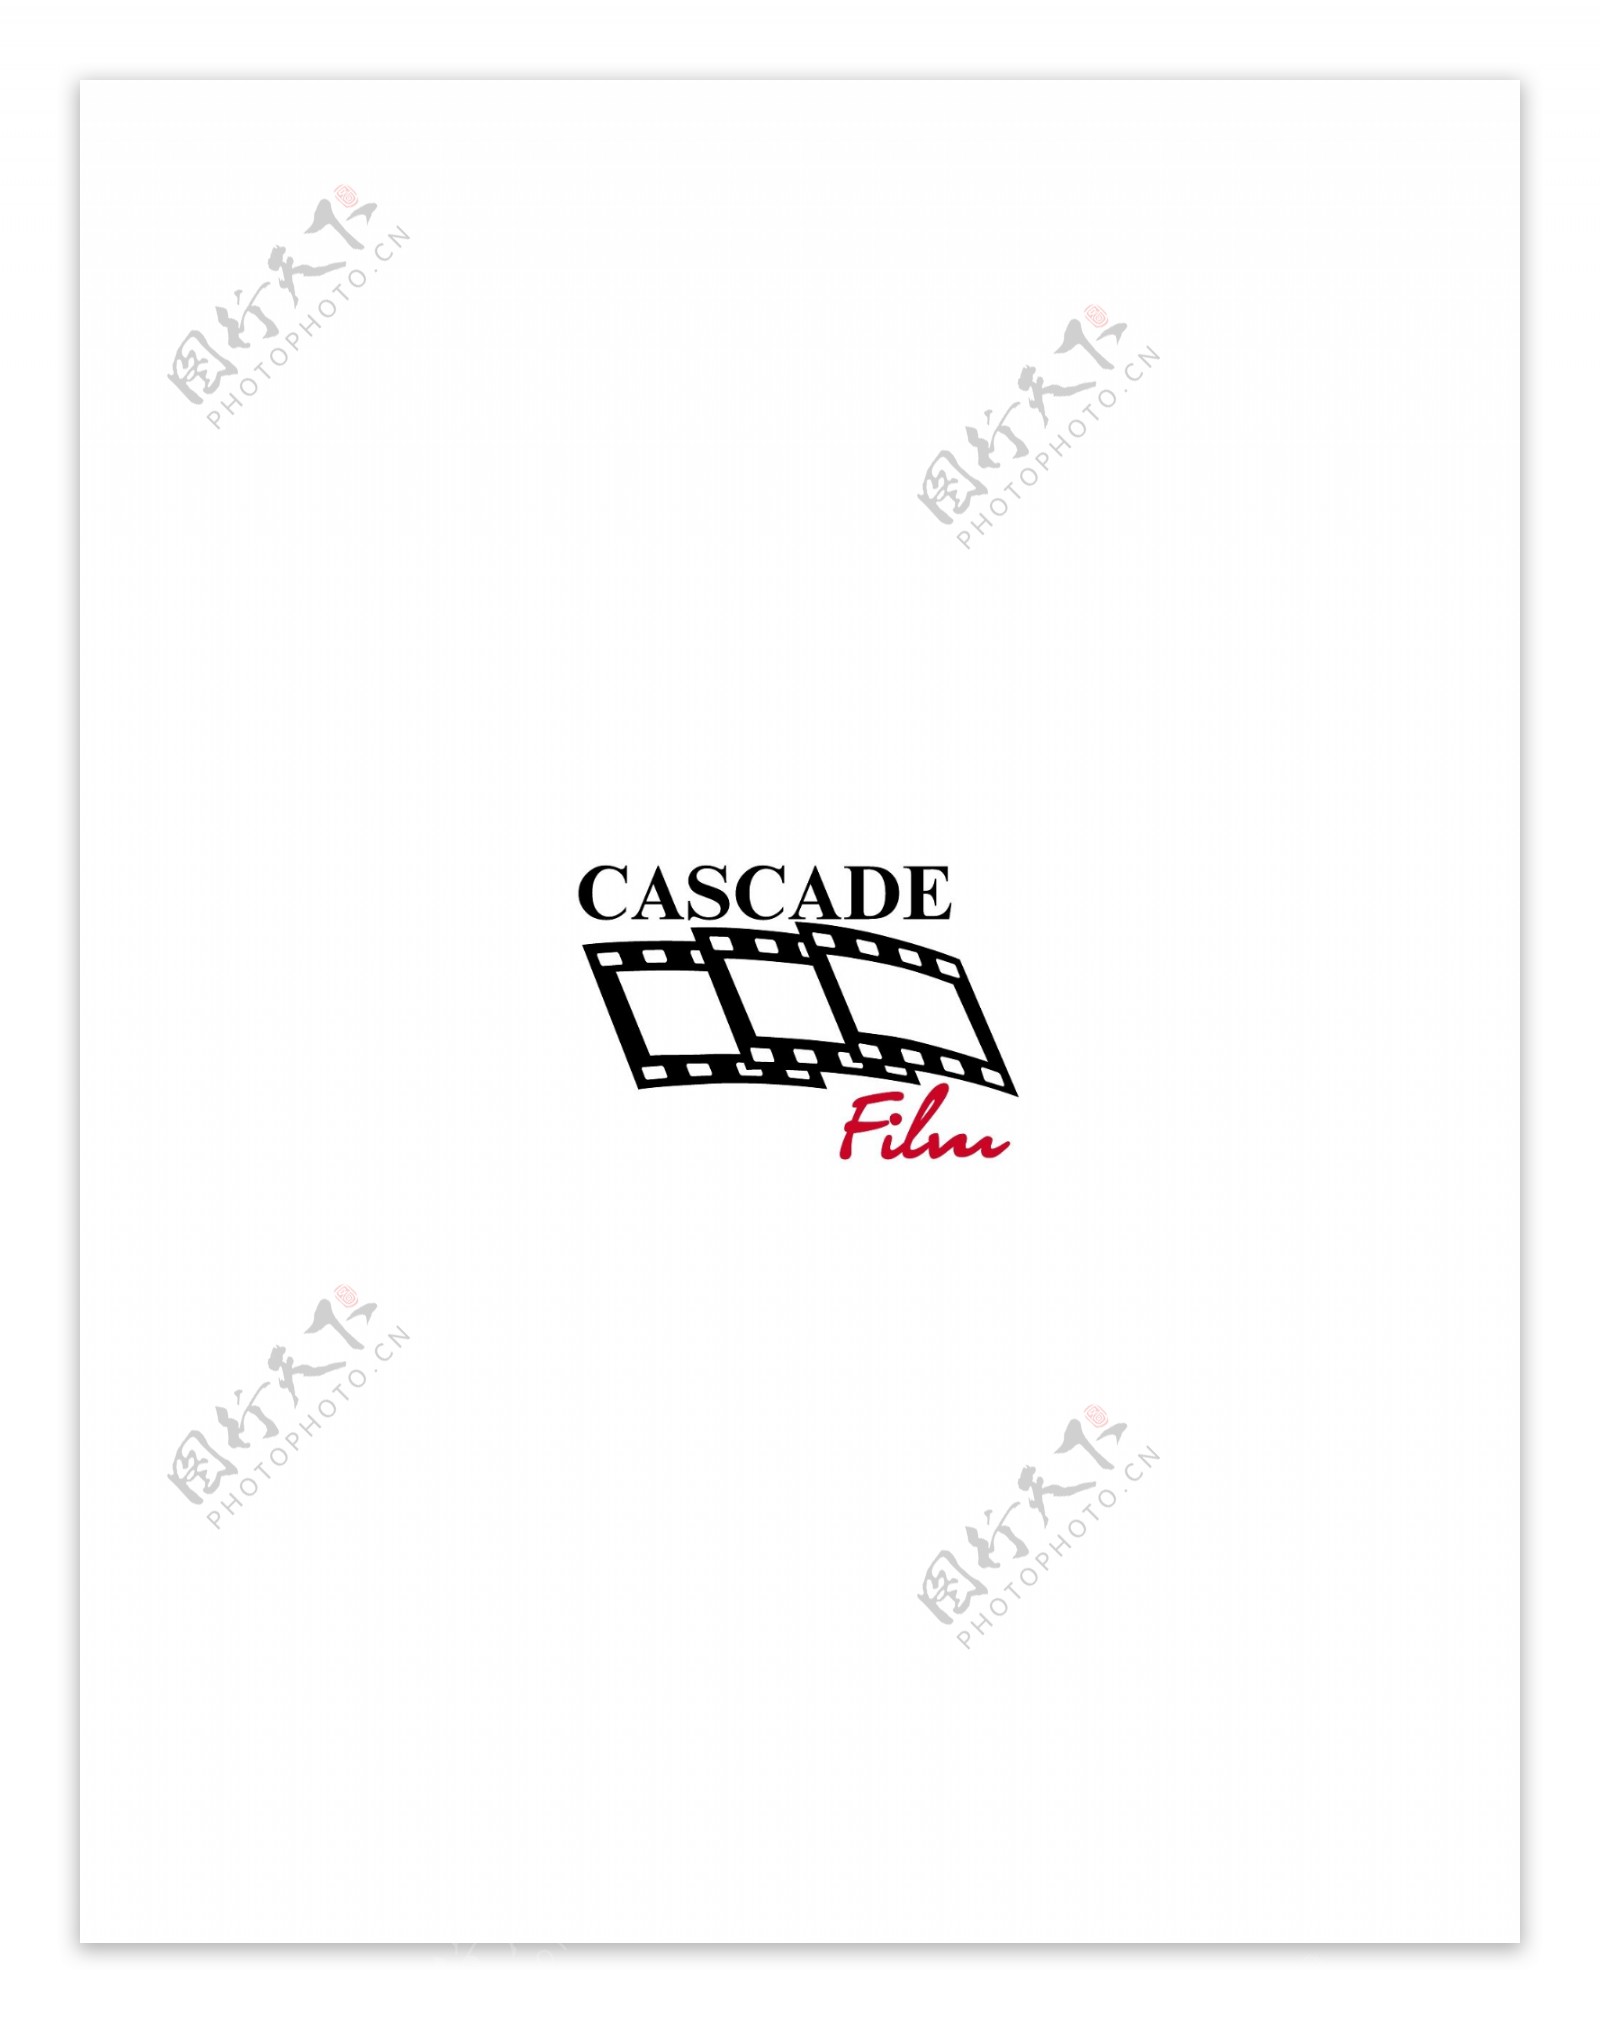 CascadeFilmlogo设计欣赏IT高科技公司标志CascadeFilm下载标志设计欣赏